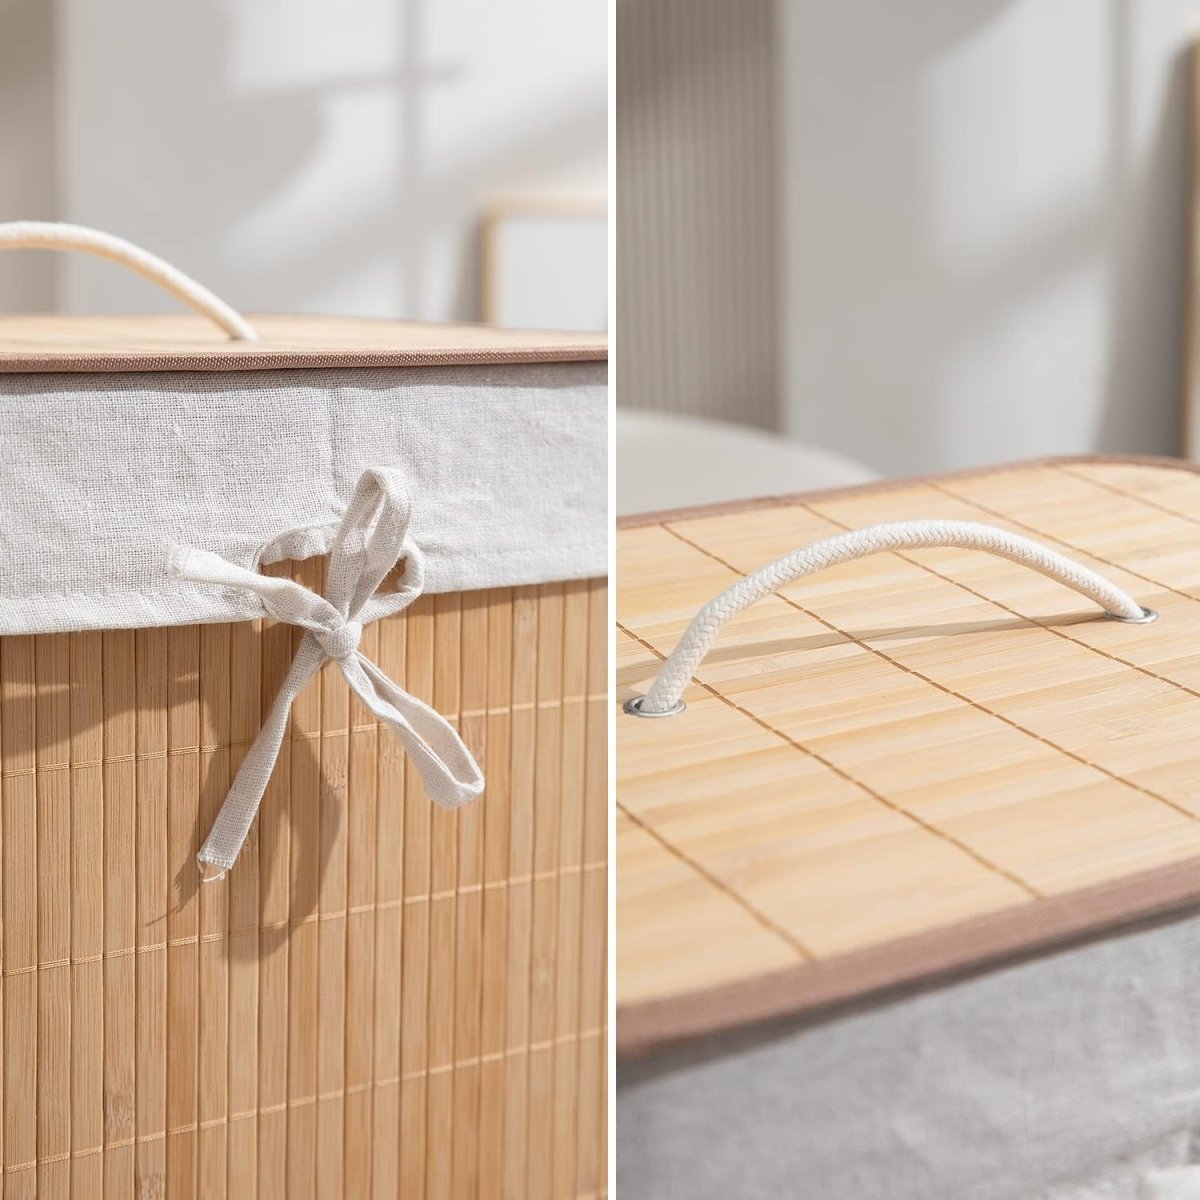 Bamboo Laundry Basket With Lid (40CM*30CM*60CM) Laundry Bag- #Royalkart#clothes basket